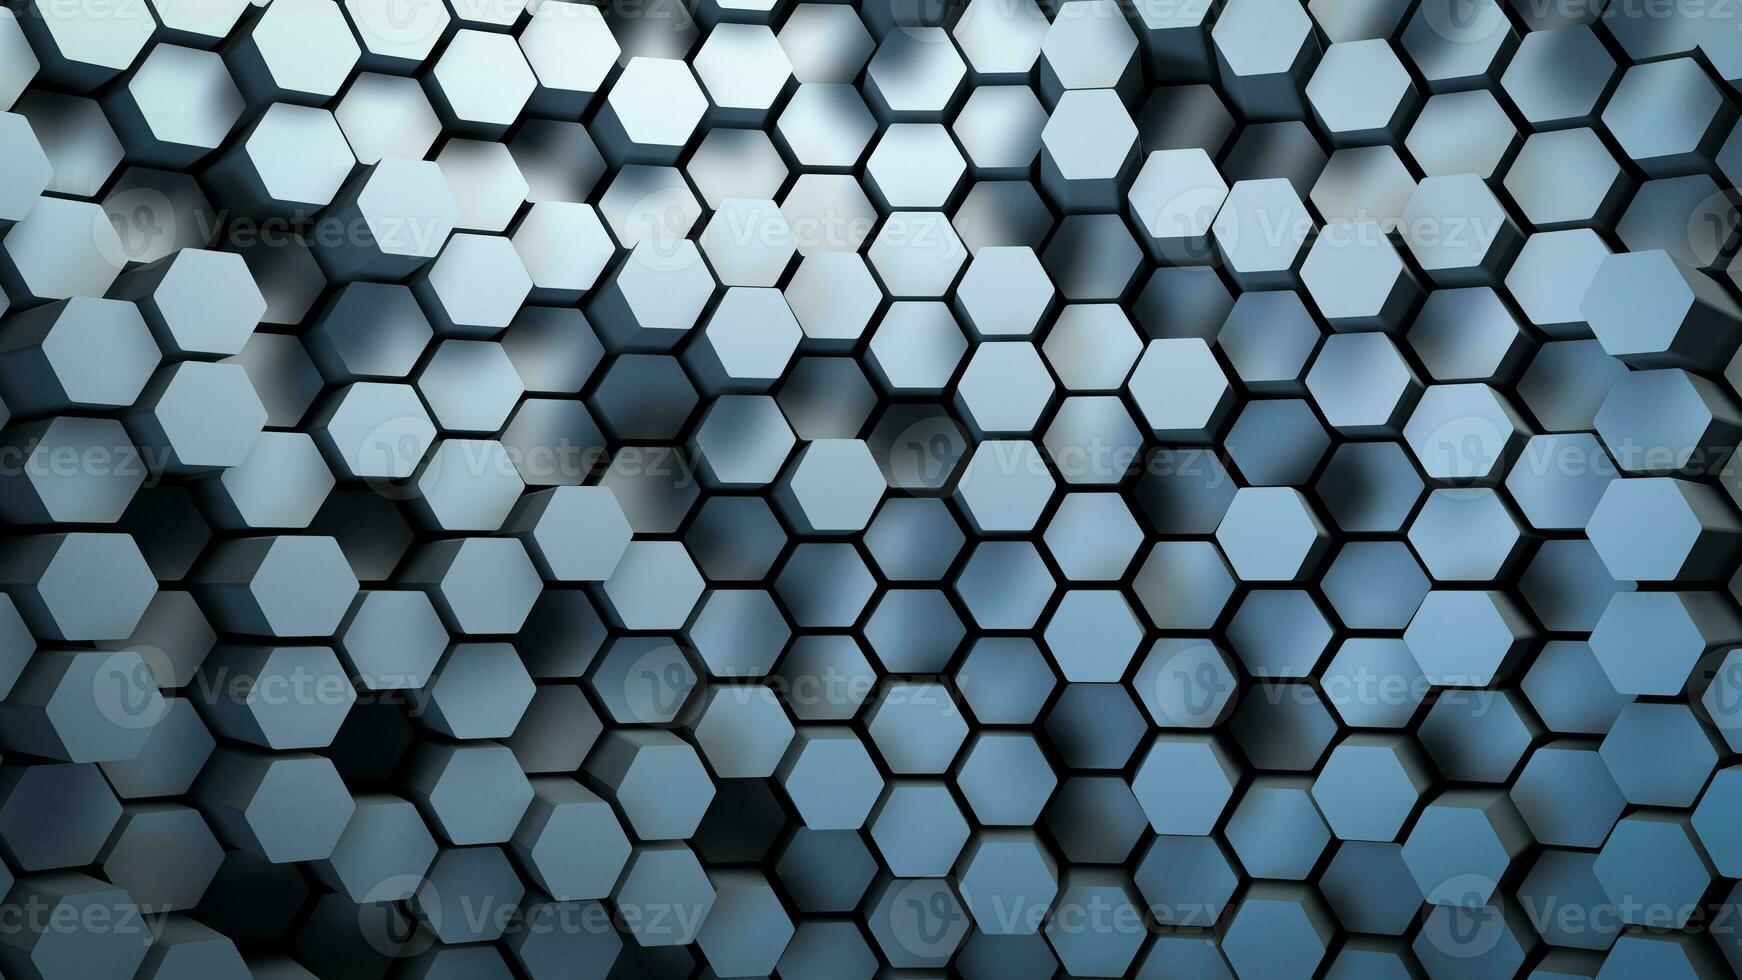 Pattern of tiles photo